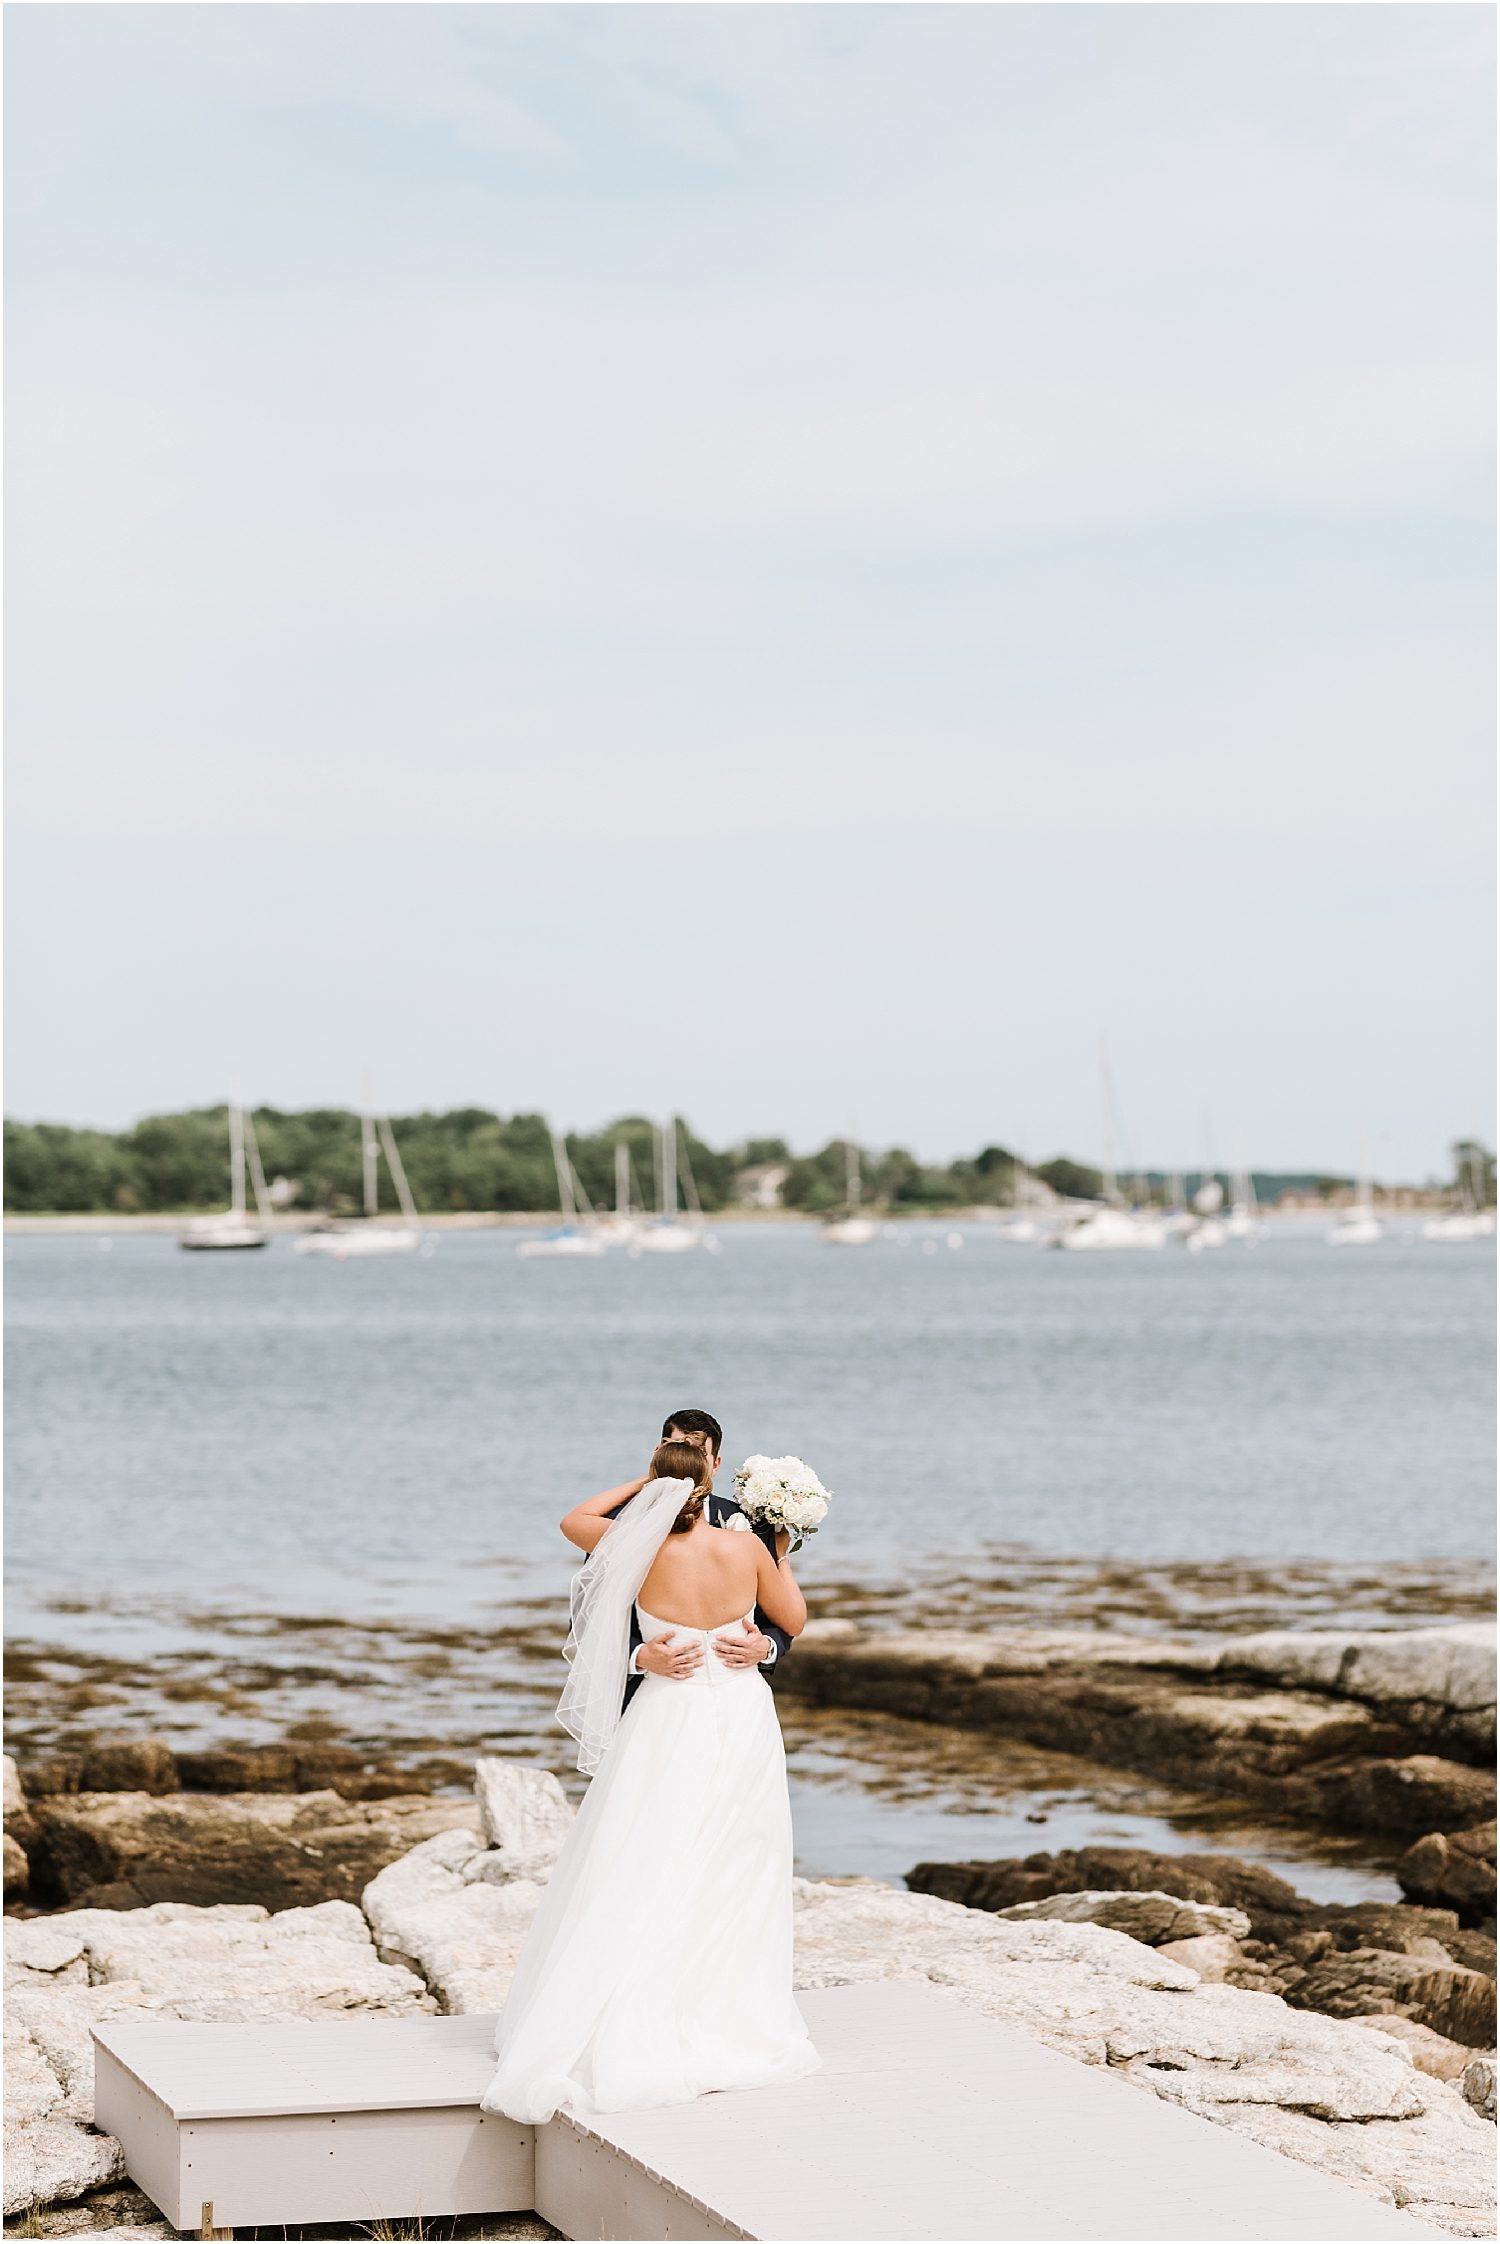 Joyful Summer Coastal Wedding at the Wentworth by the Sea Country Club in Rye, NH by Boston Wedding Photographer Annmarie Swift